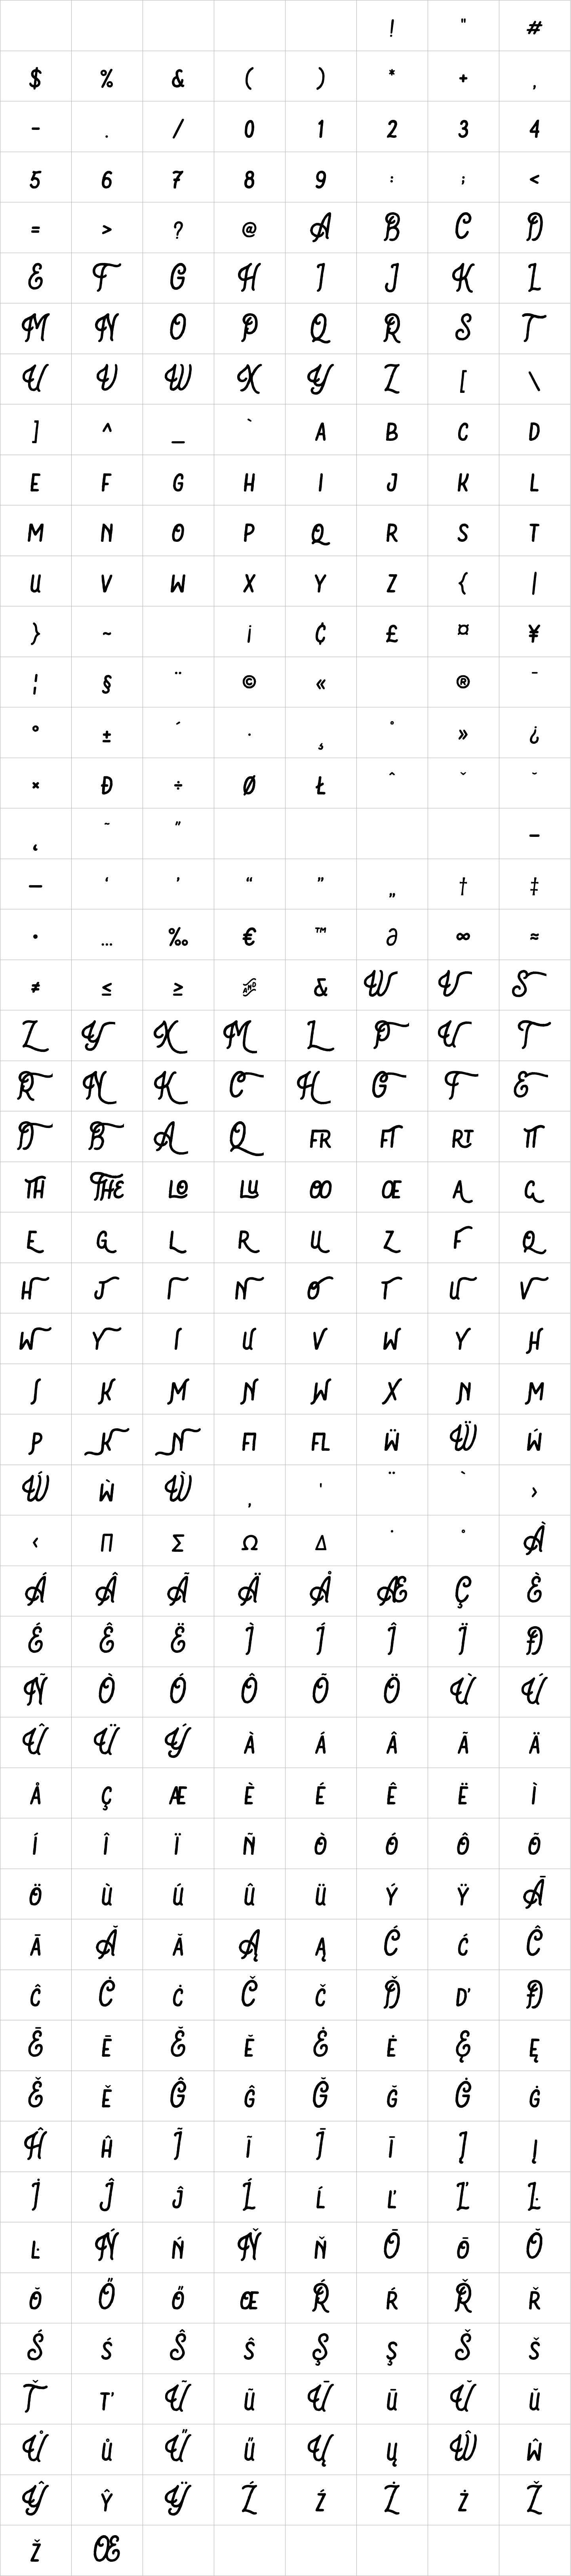 Bartond Typeface Regular image